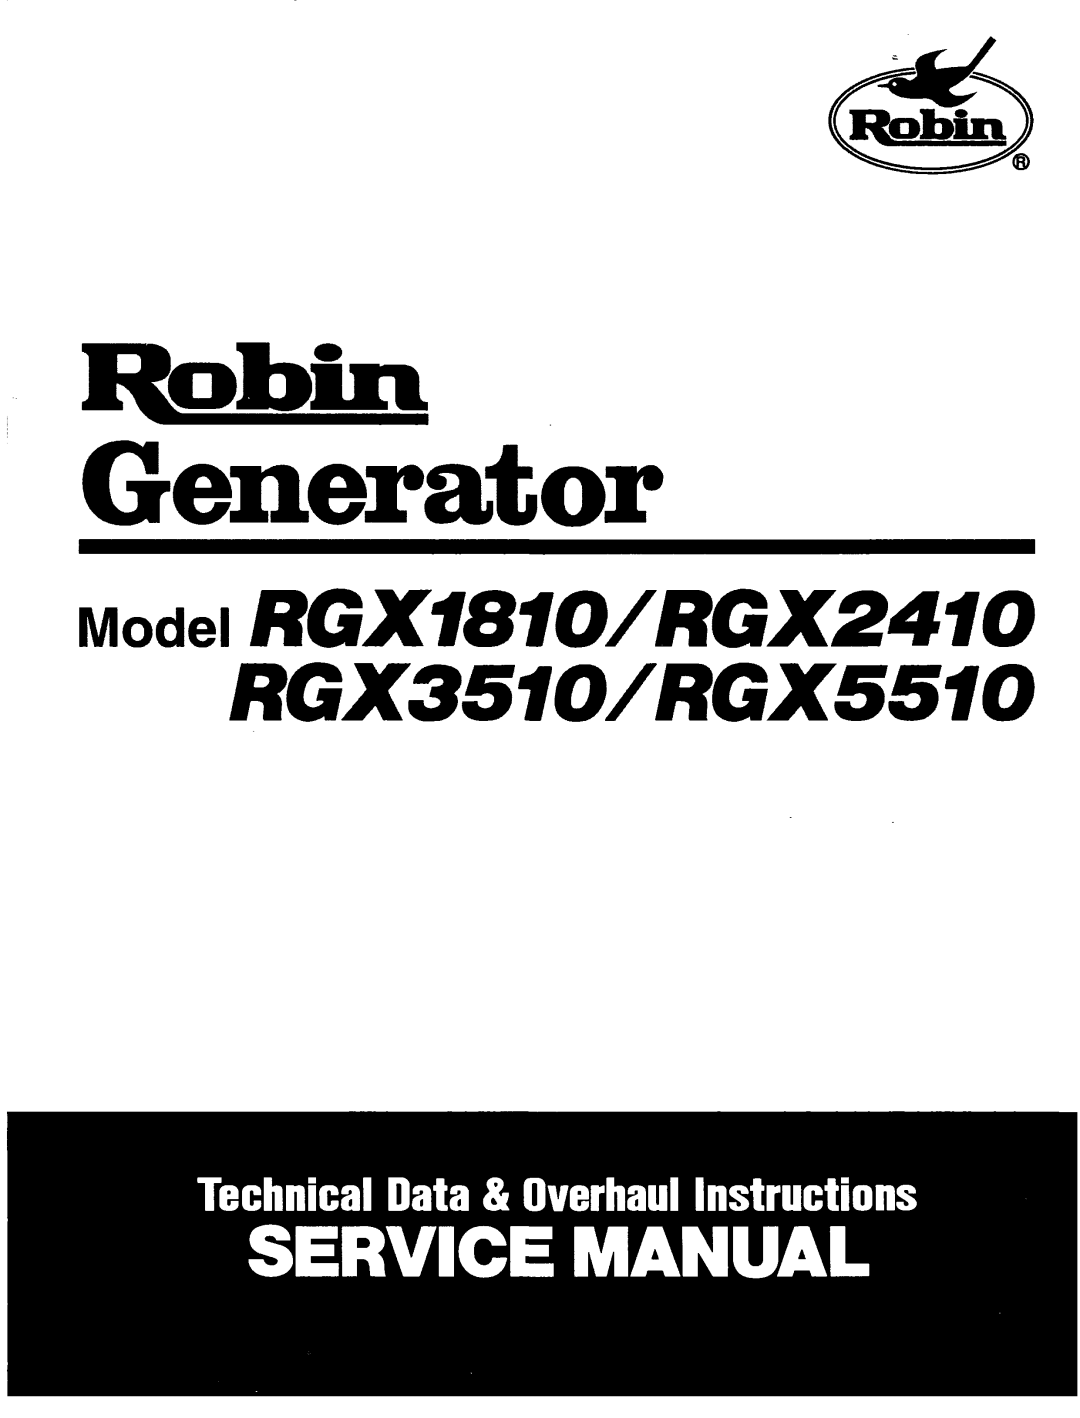 Subaru Robin Power Products manual Generator, RGX3510/RGX5510, Model RGXl810/RGX2410 